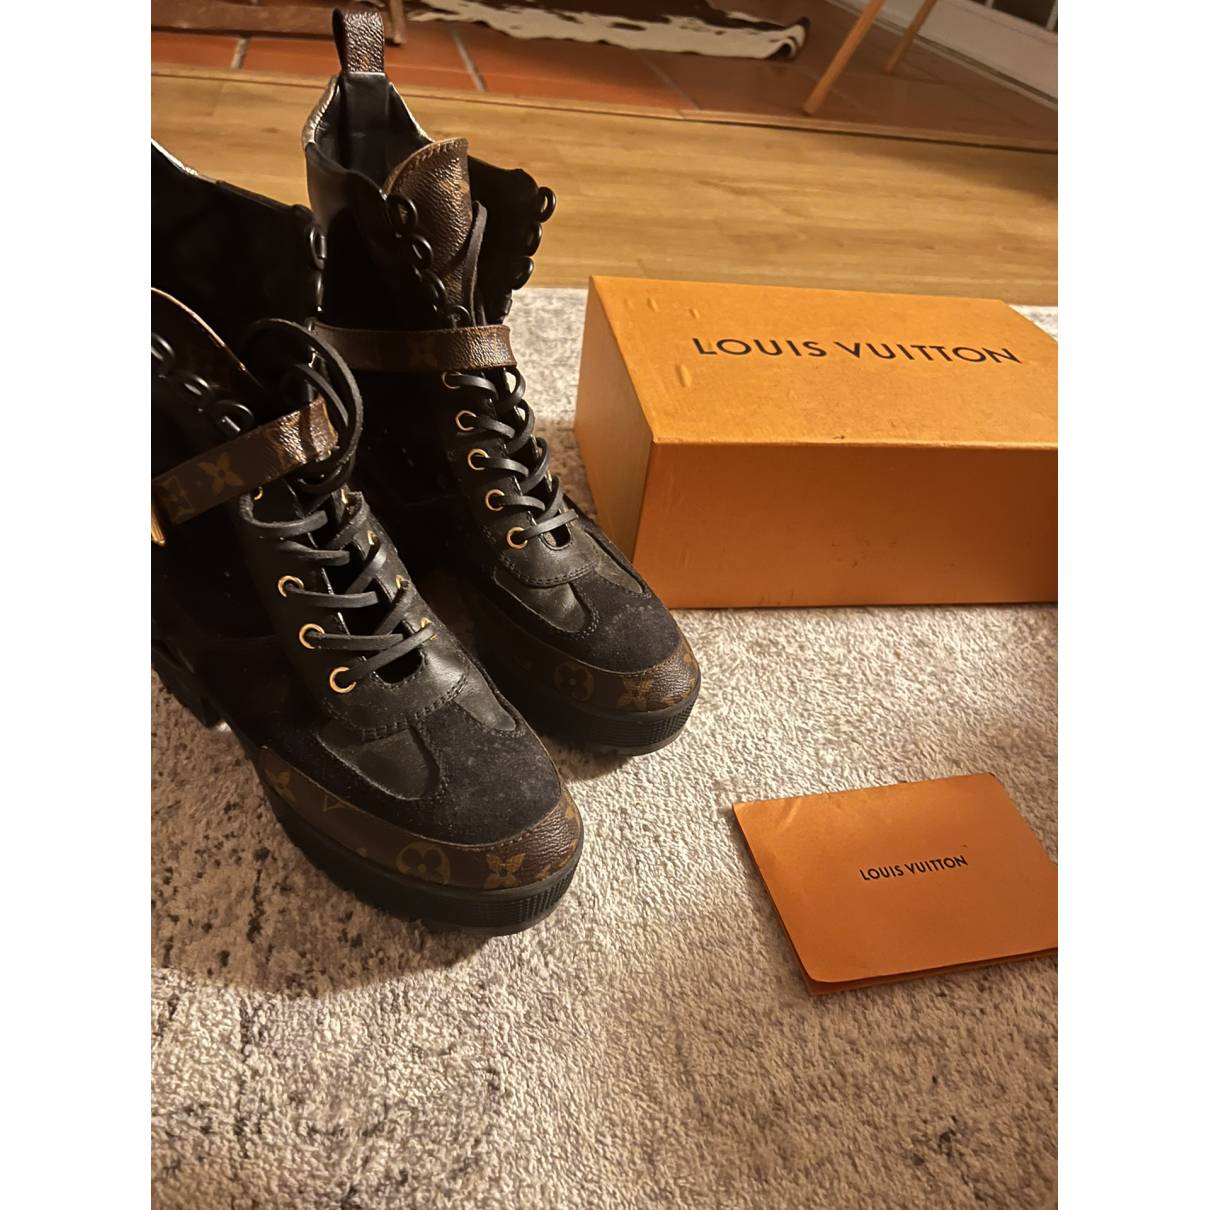 Louis Vuitton - Authenticated Lauréate Boots - Leather Black for Women, Good Condition